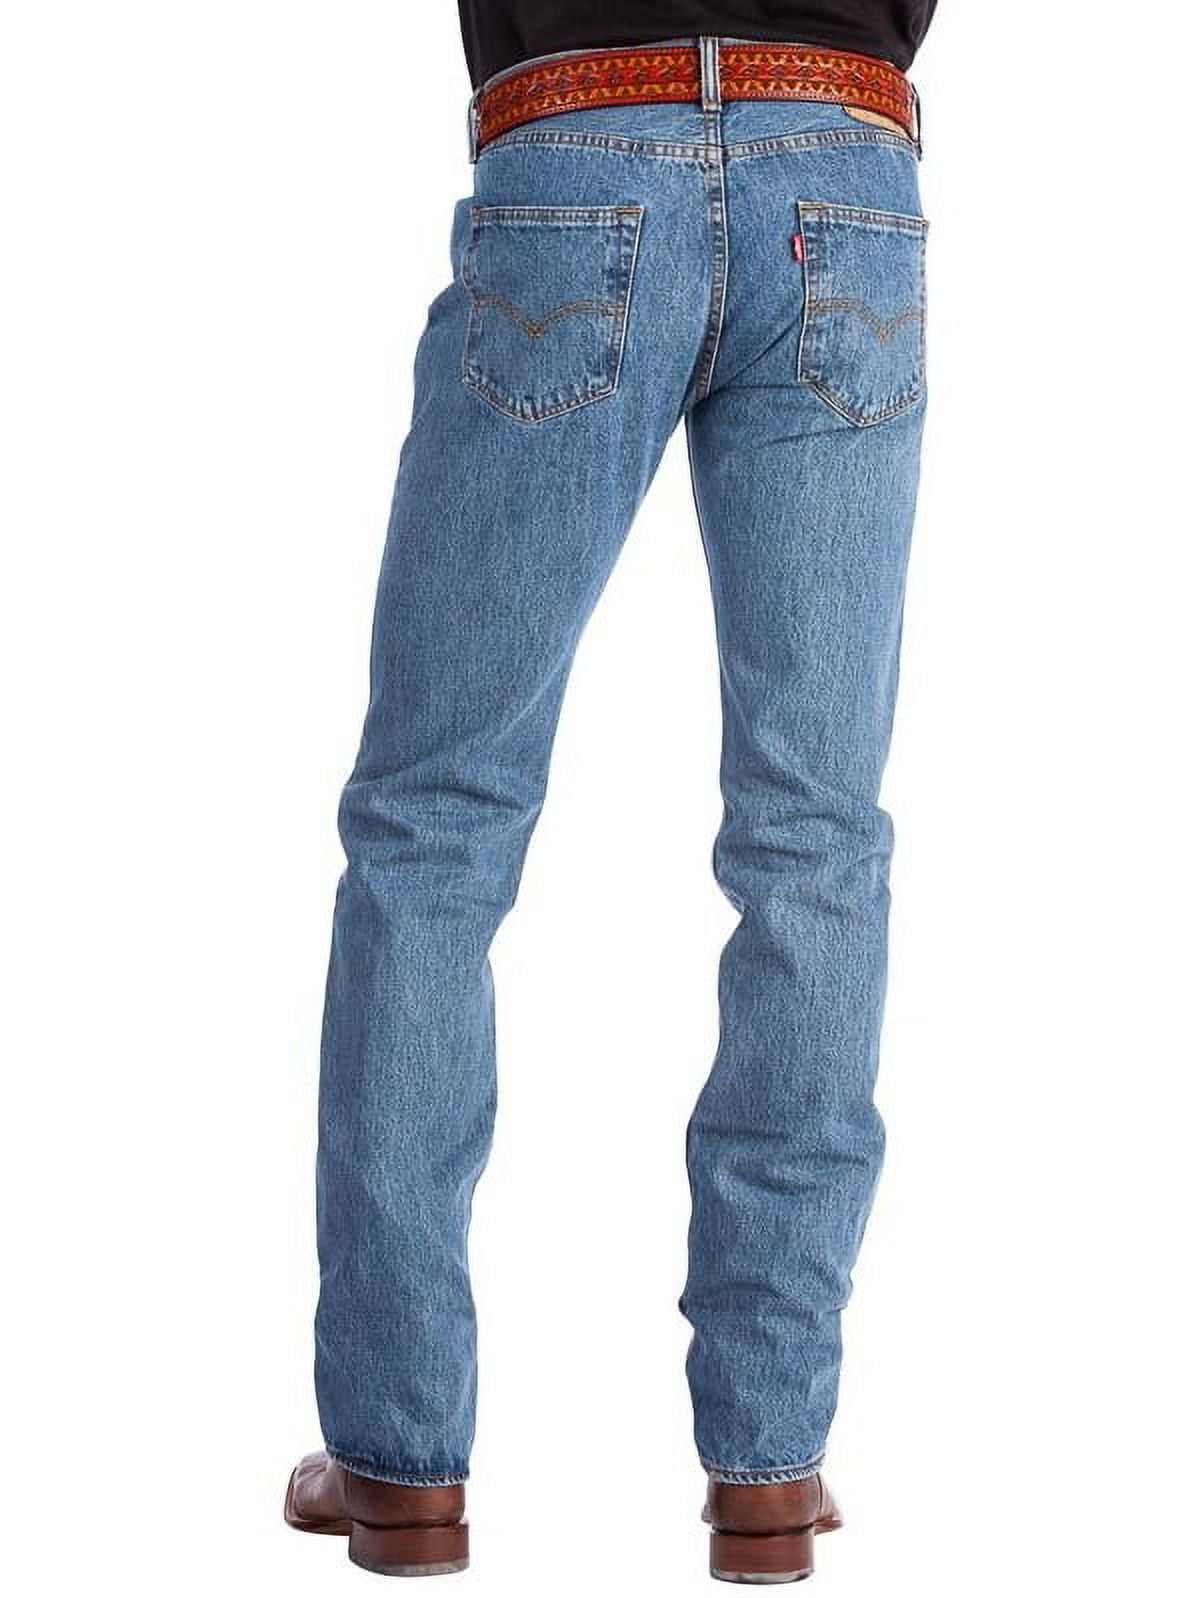 Levis 501 Button Fly Jeans Men's 42 x 32 Neon Pink Tag Blue Denim